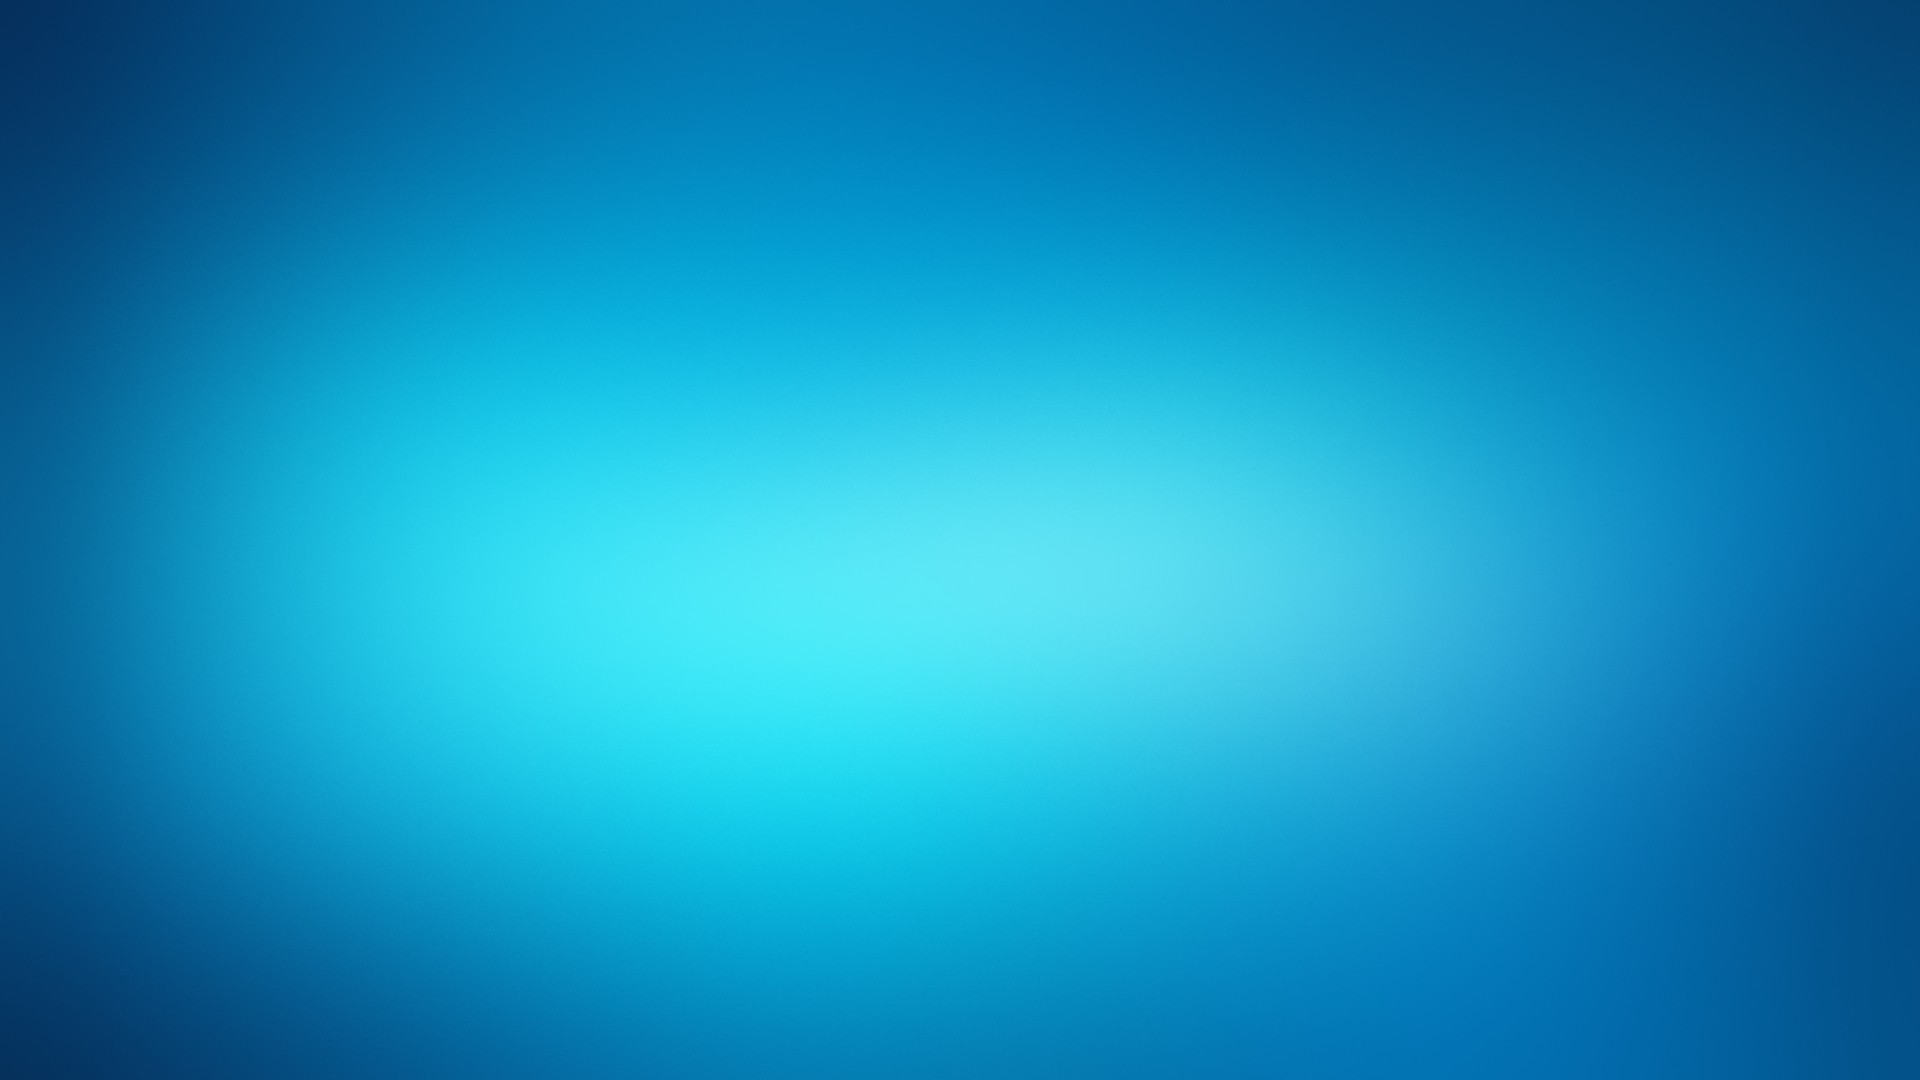 General 1920x1080 blue cyan minimalism gradient texture digital art simple background